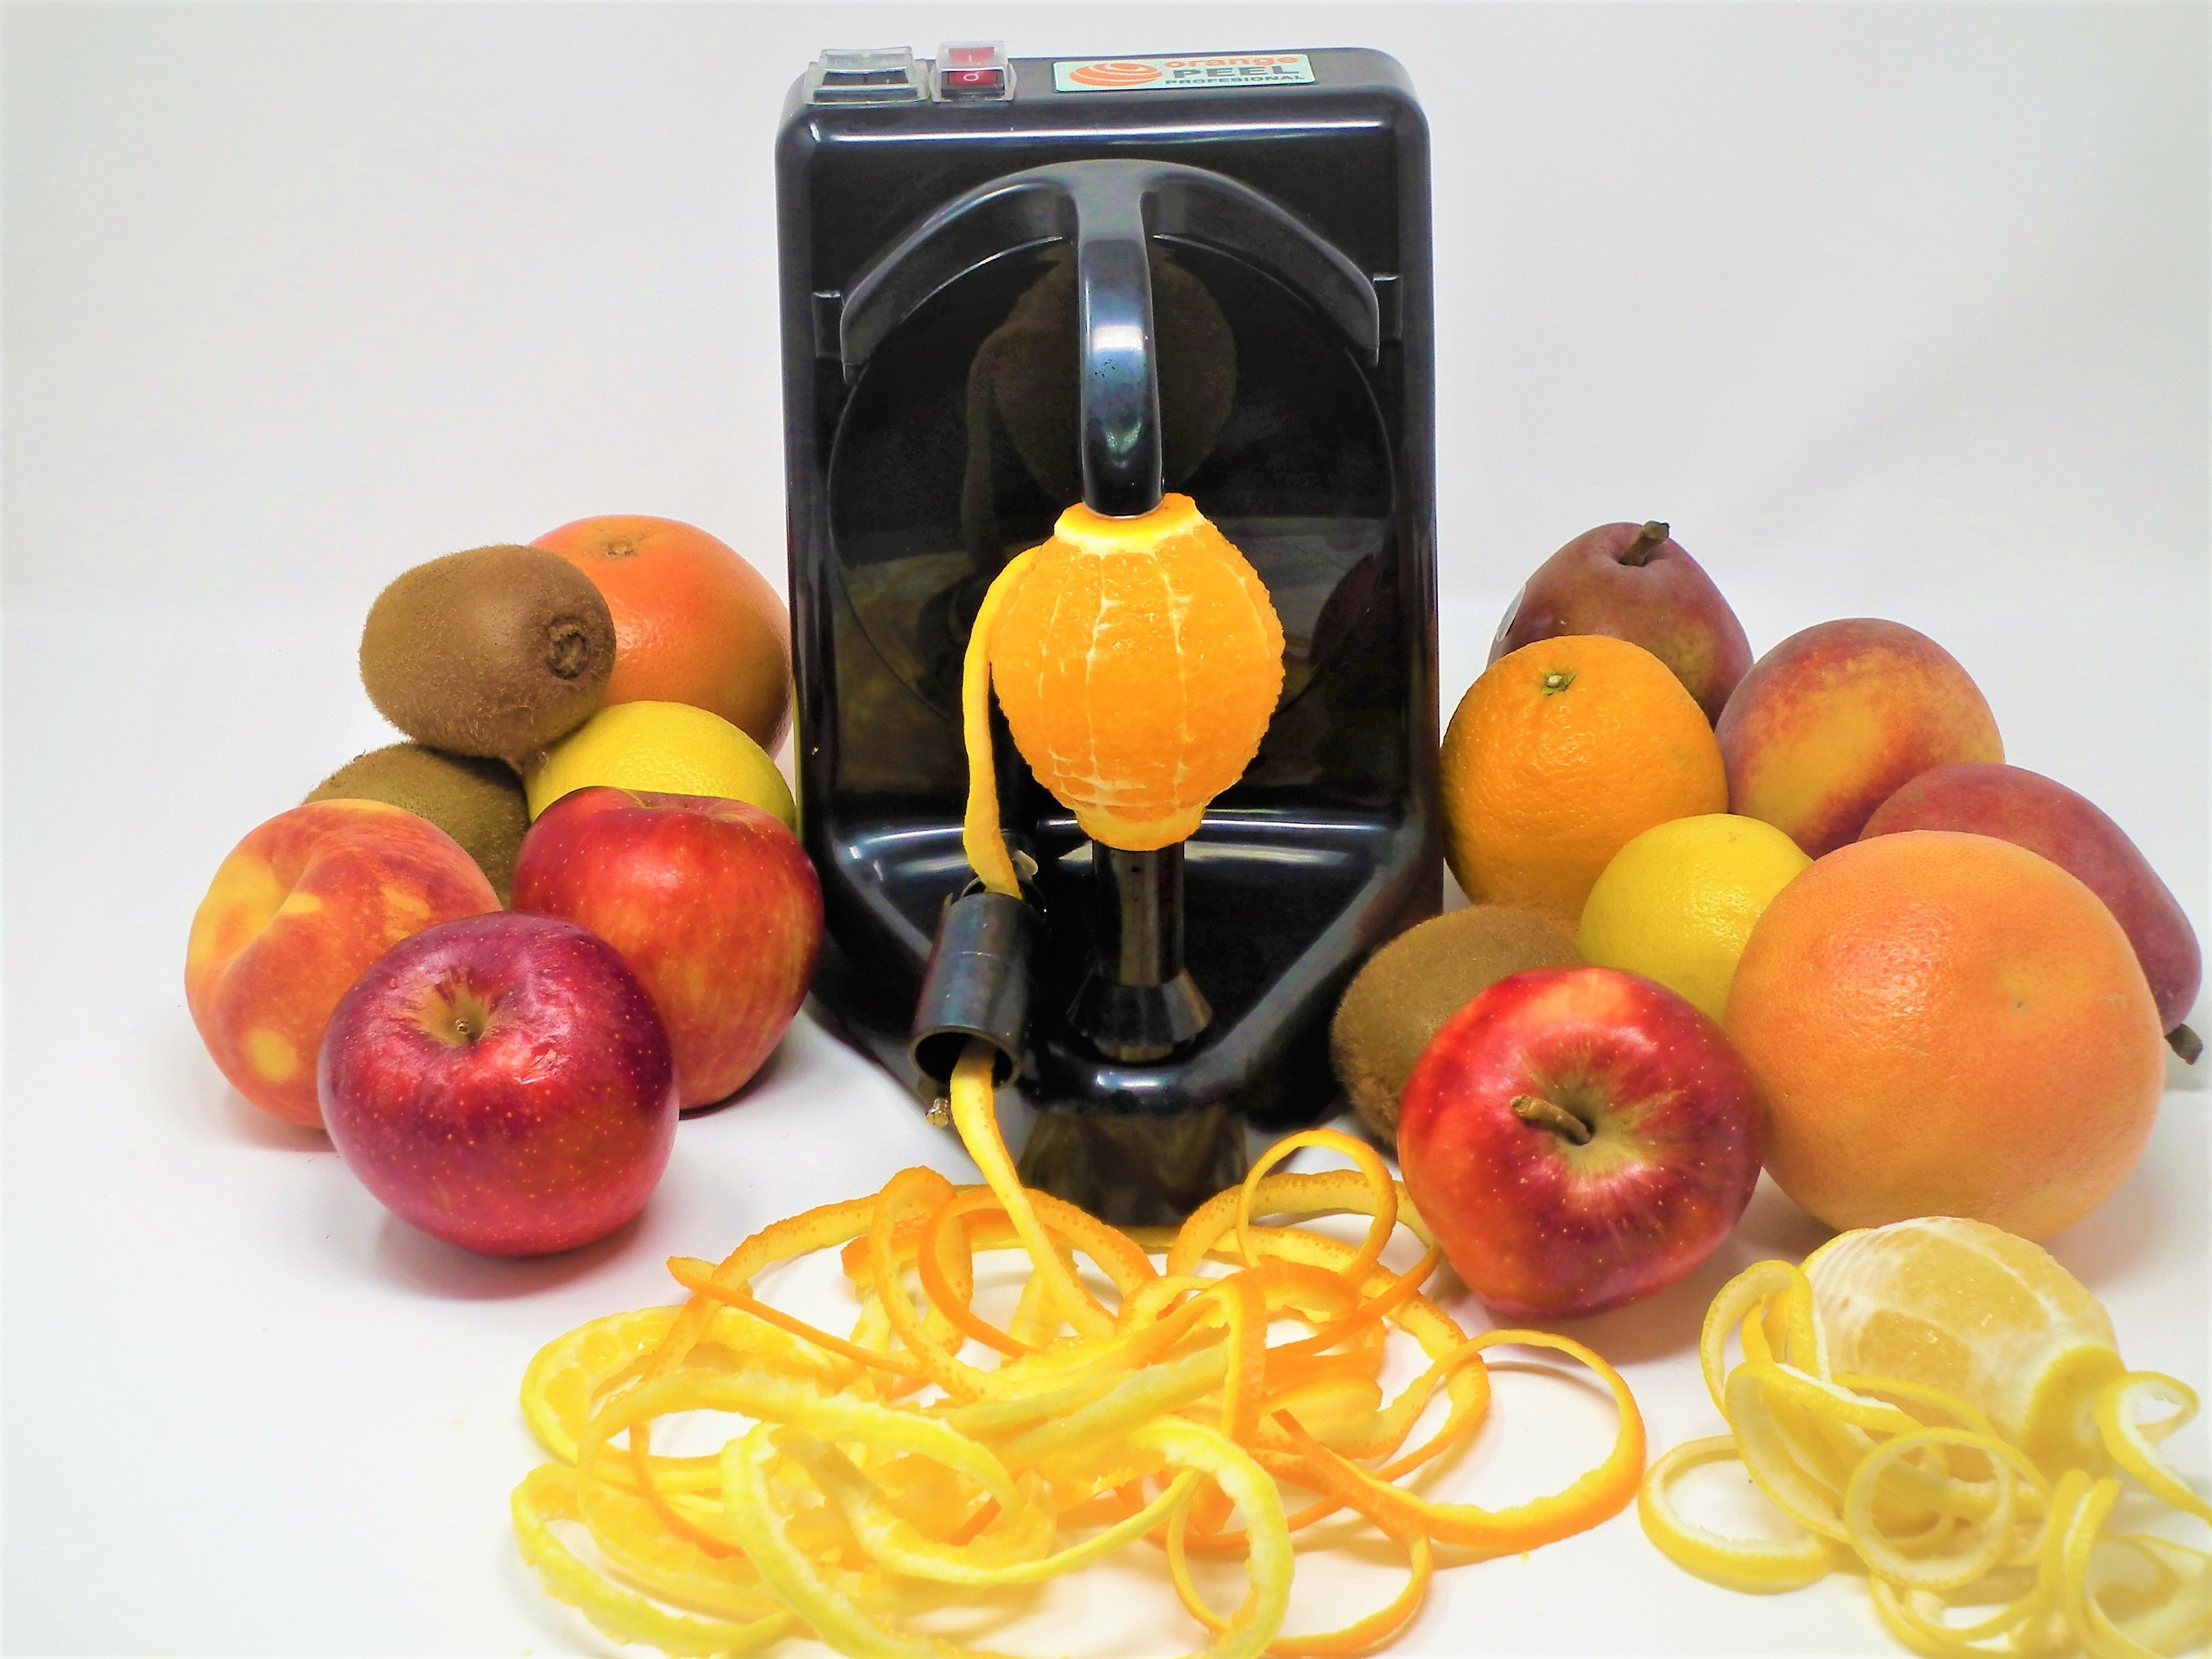 Electric peeler multifunctional household automatic peeler orange